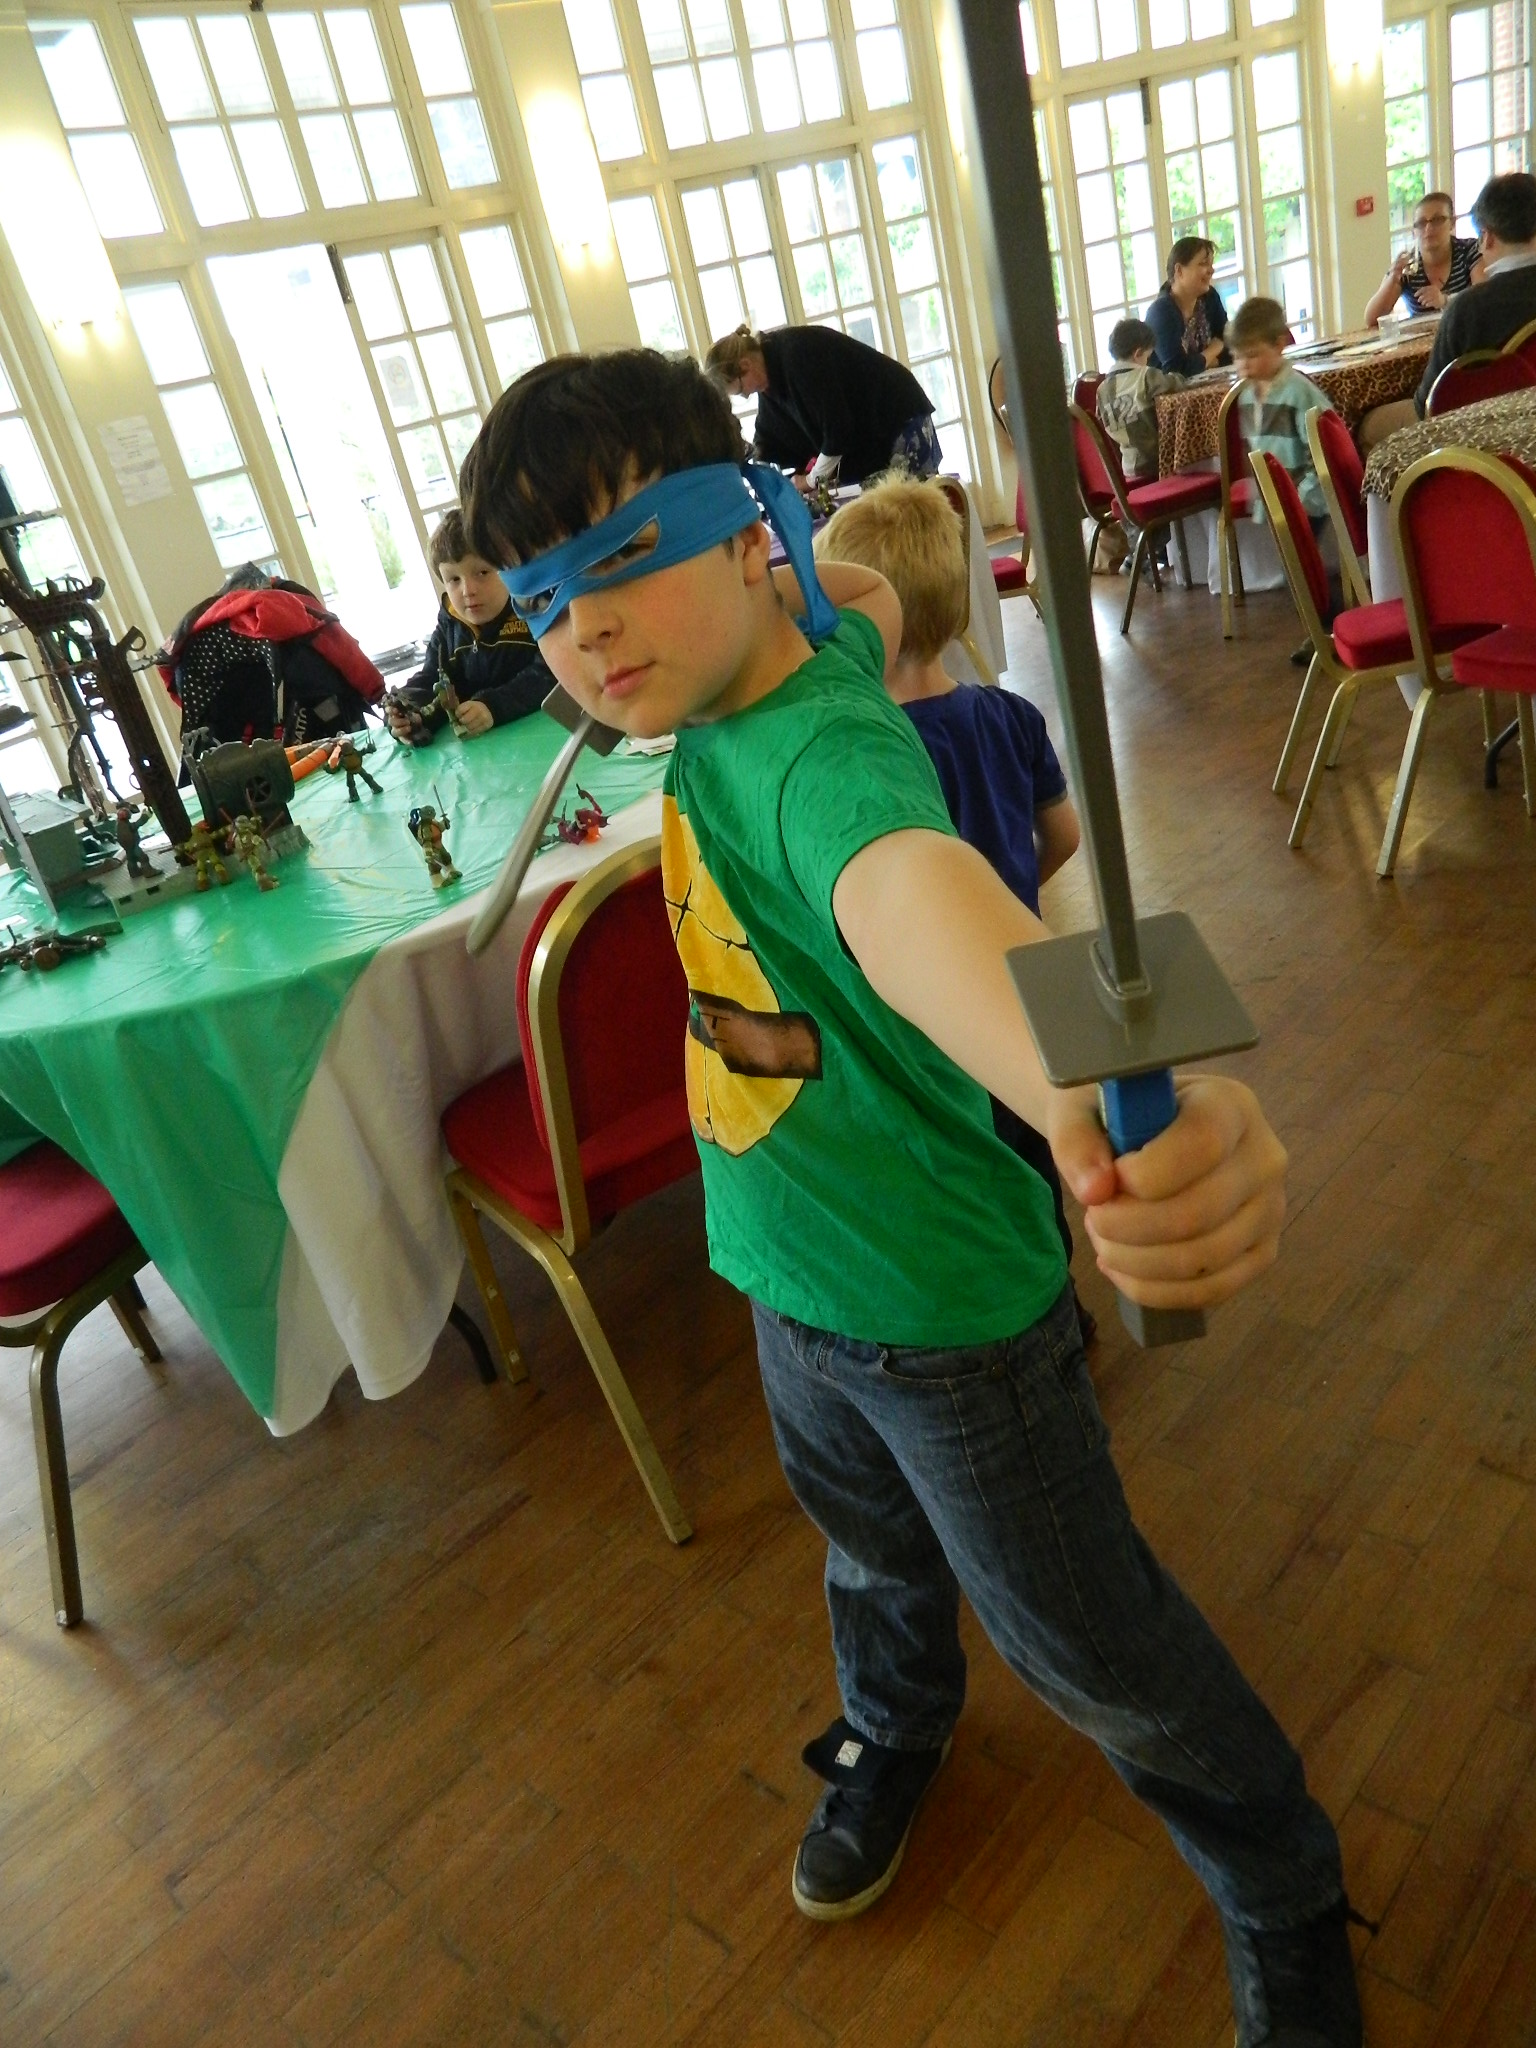 Flair: Teenage Mutant Ninja Turtles toy reviews and London Zoo event